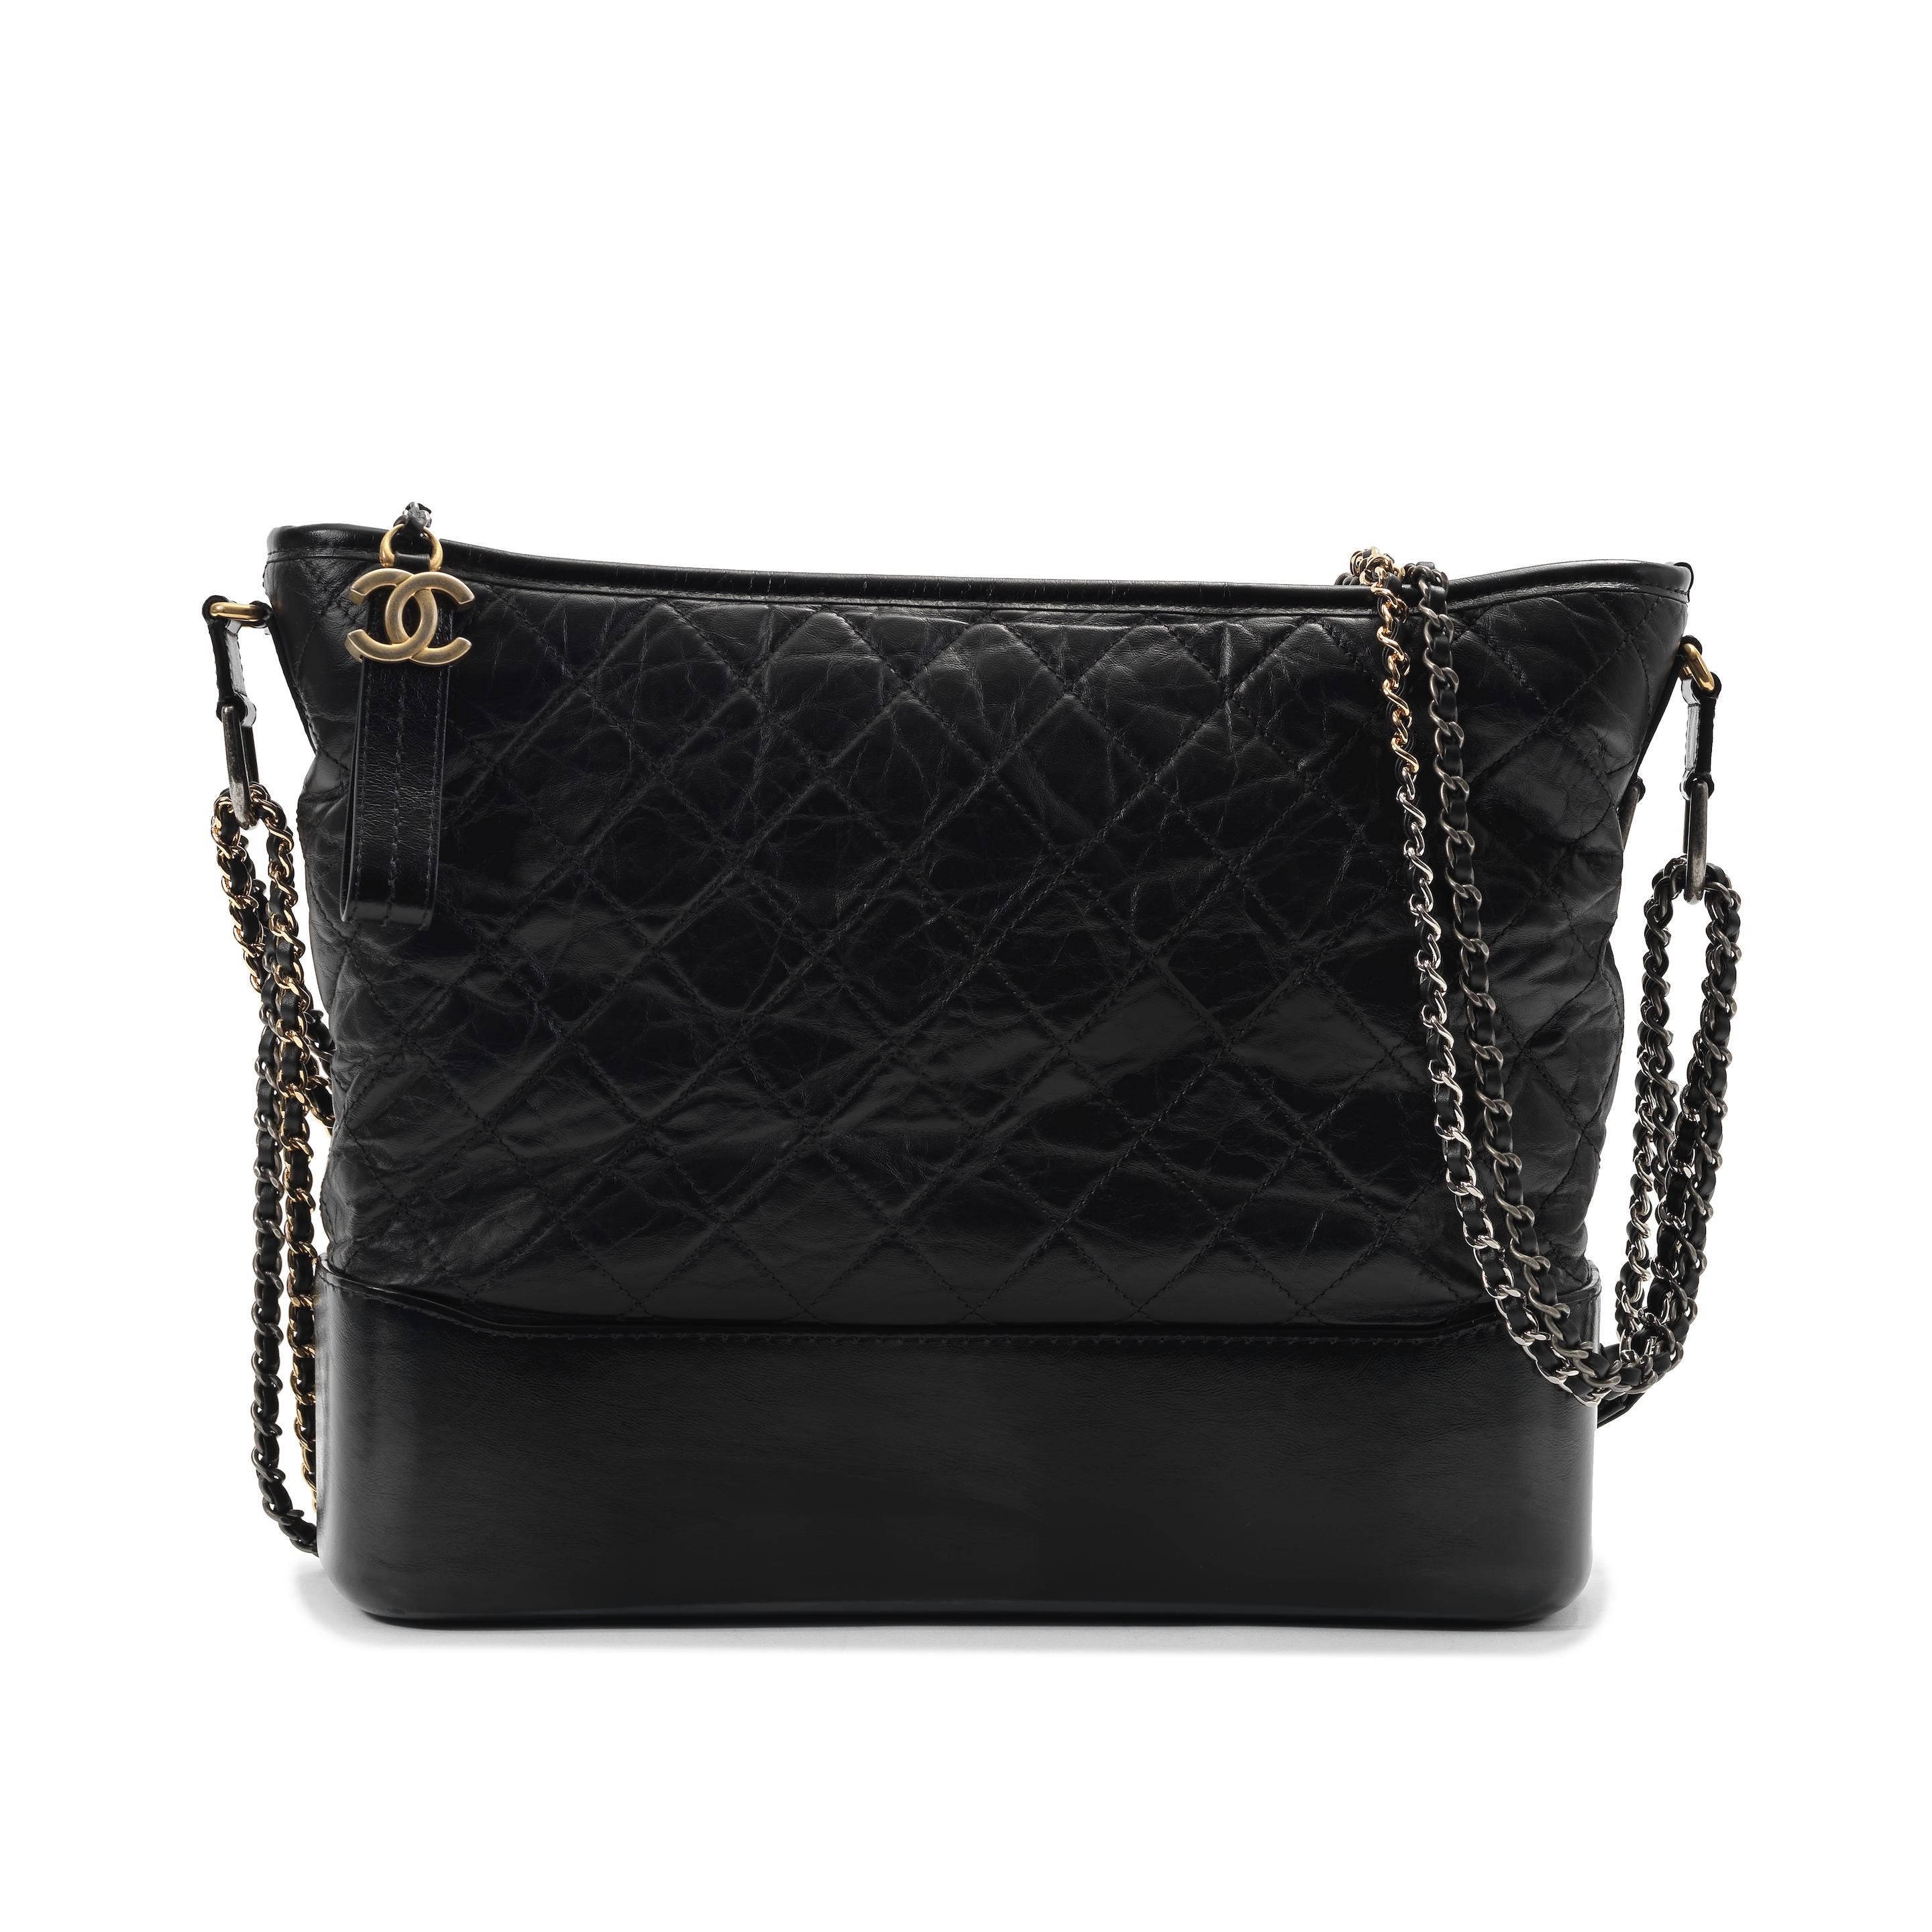 Black Chanel Bag - Gabrielle Hobo Bag